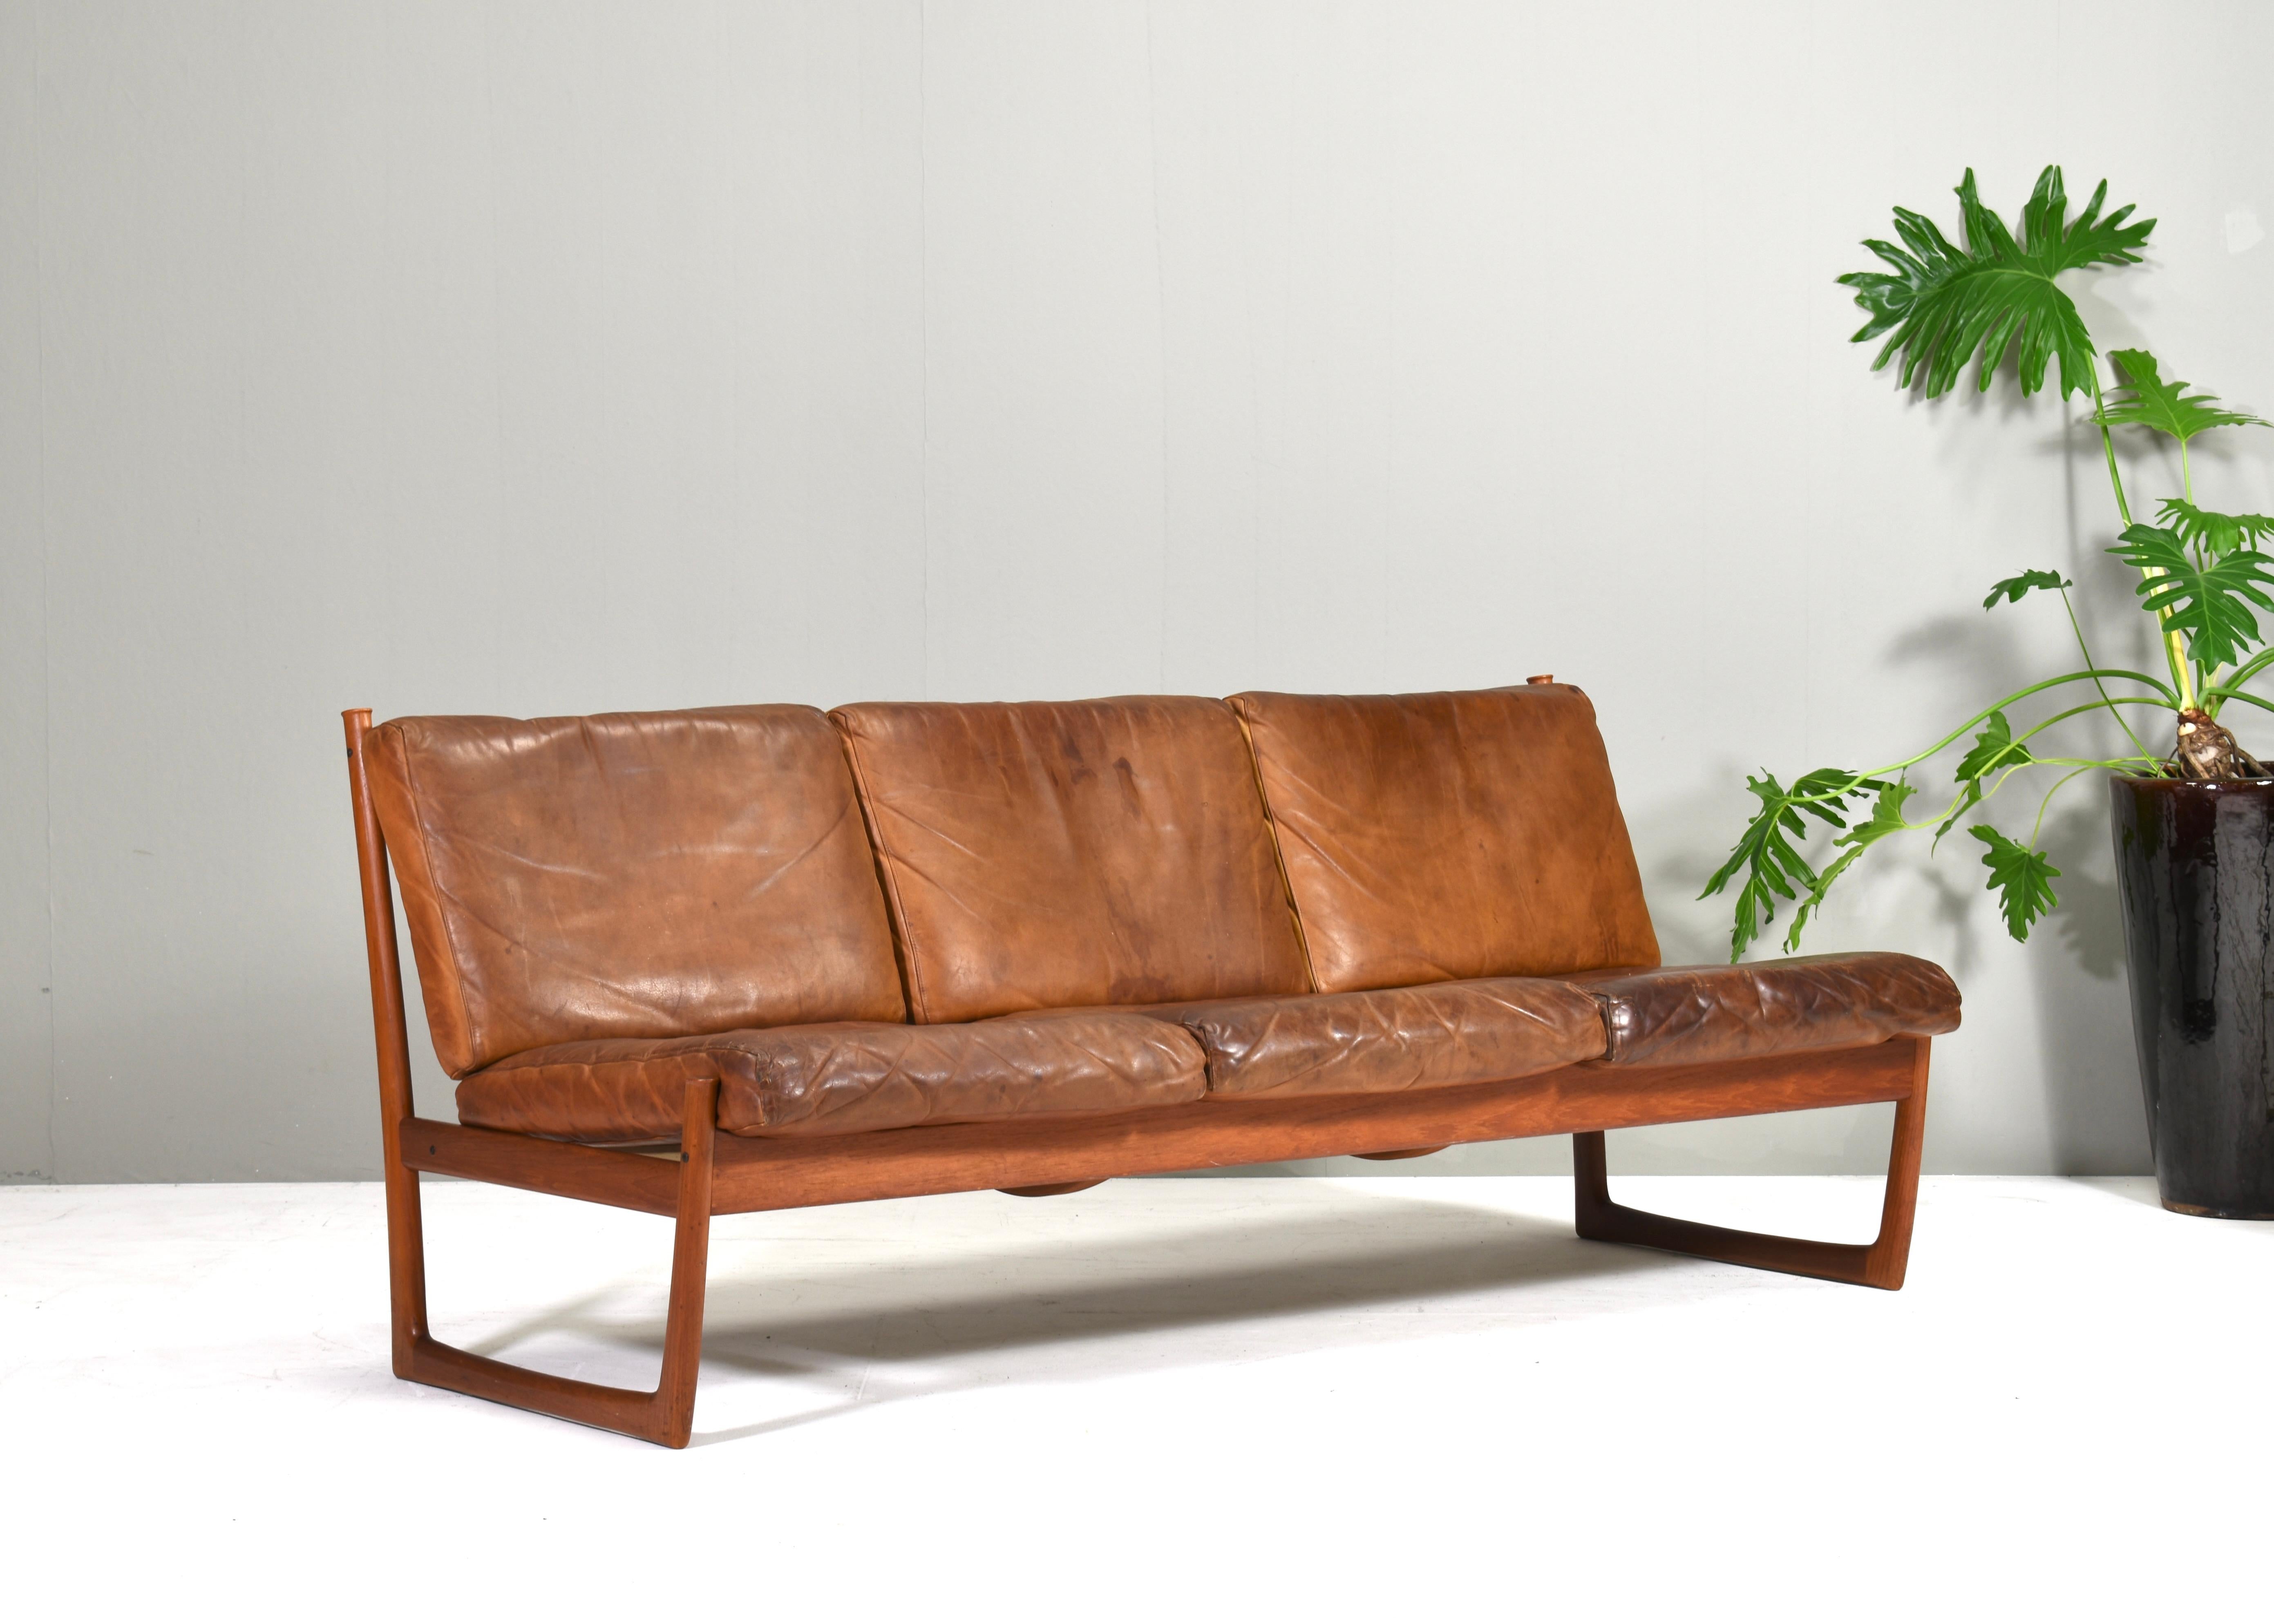 Mid-20th Century Peter Hvidt & Orla Mølgaard FD130 Teak sofa in Cognac Leather - Denmark, 1950's For Sale